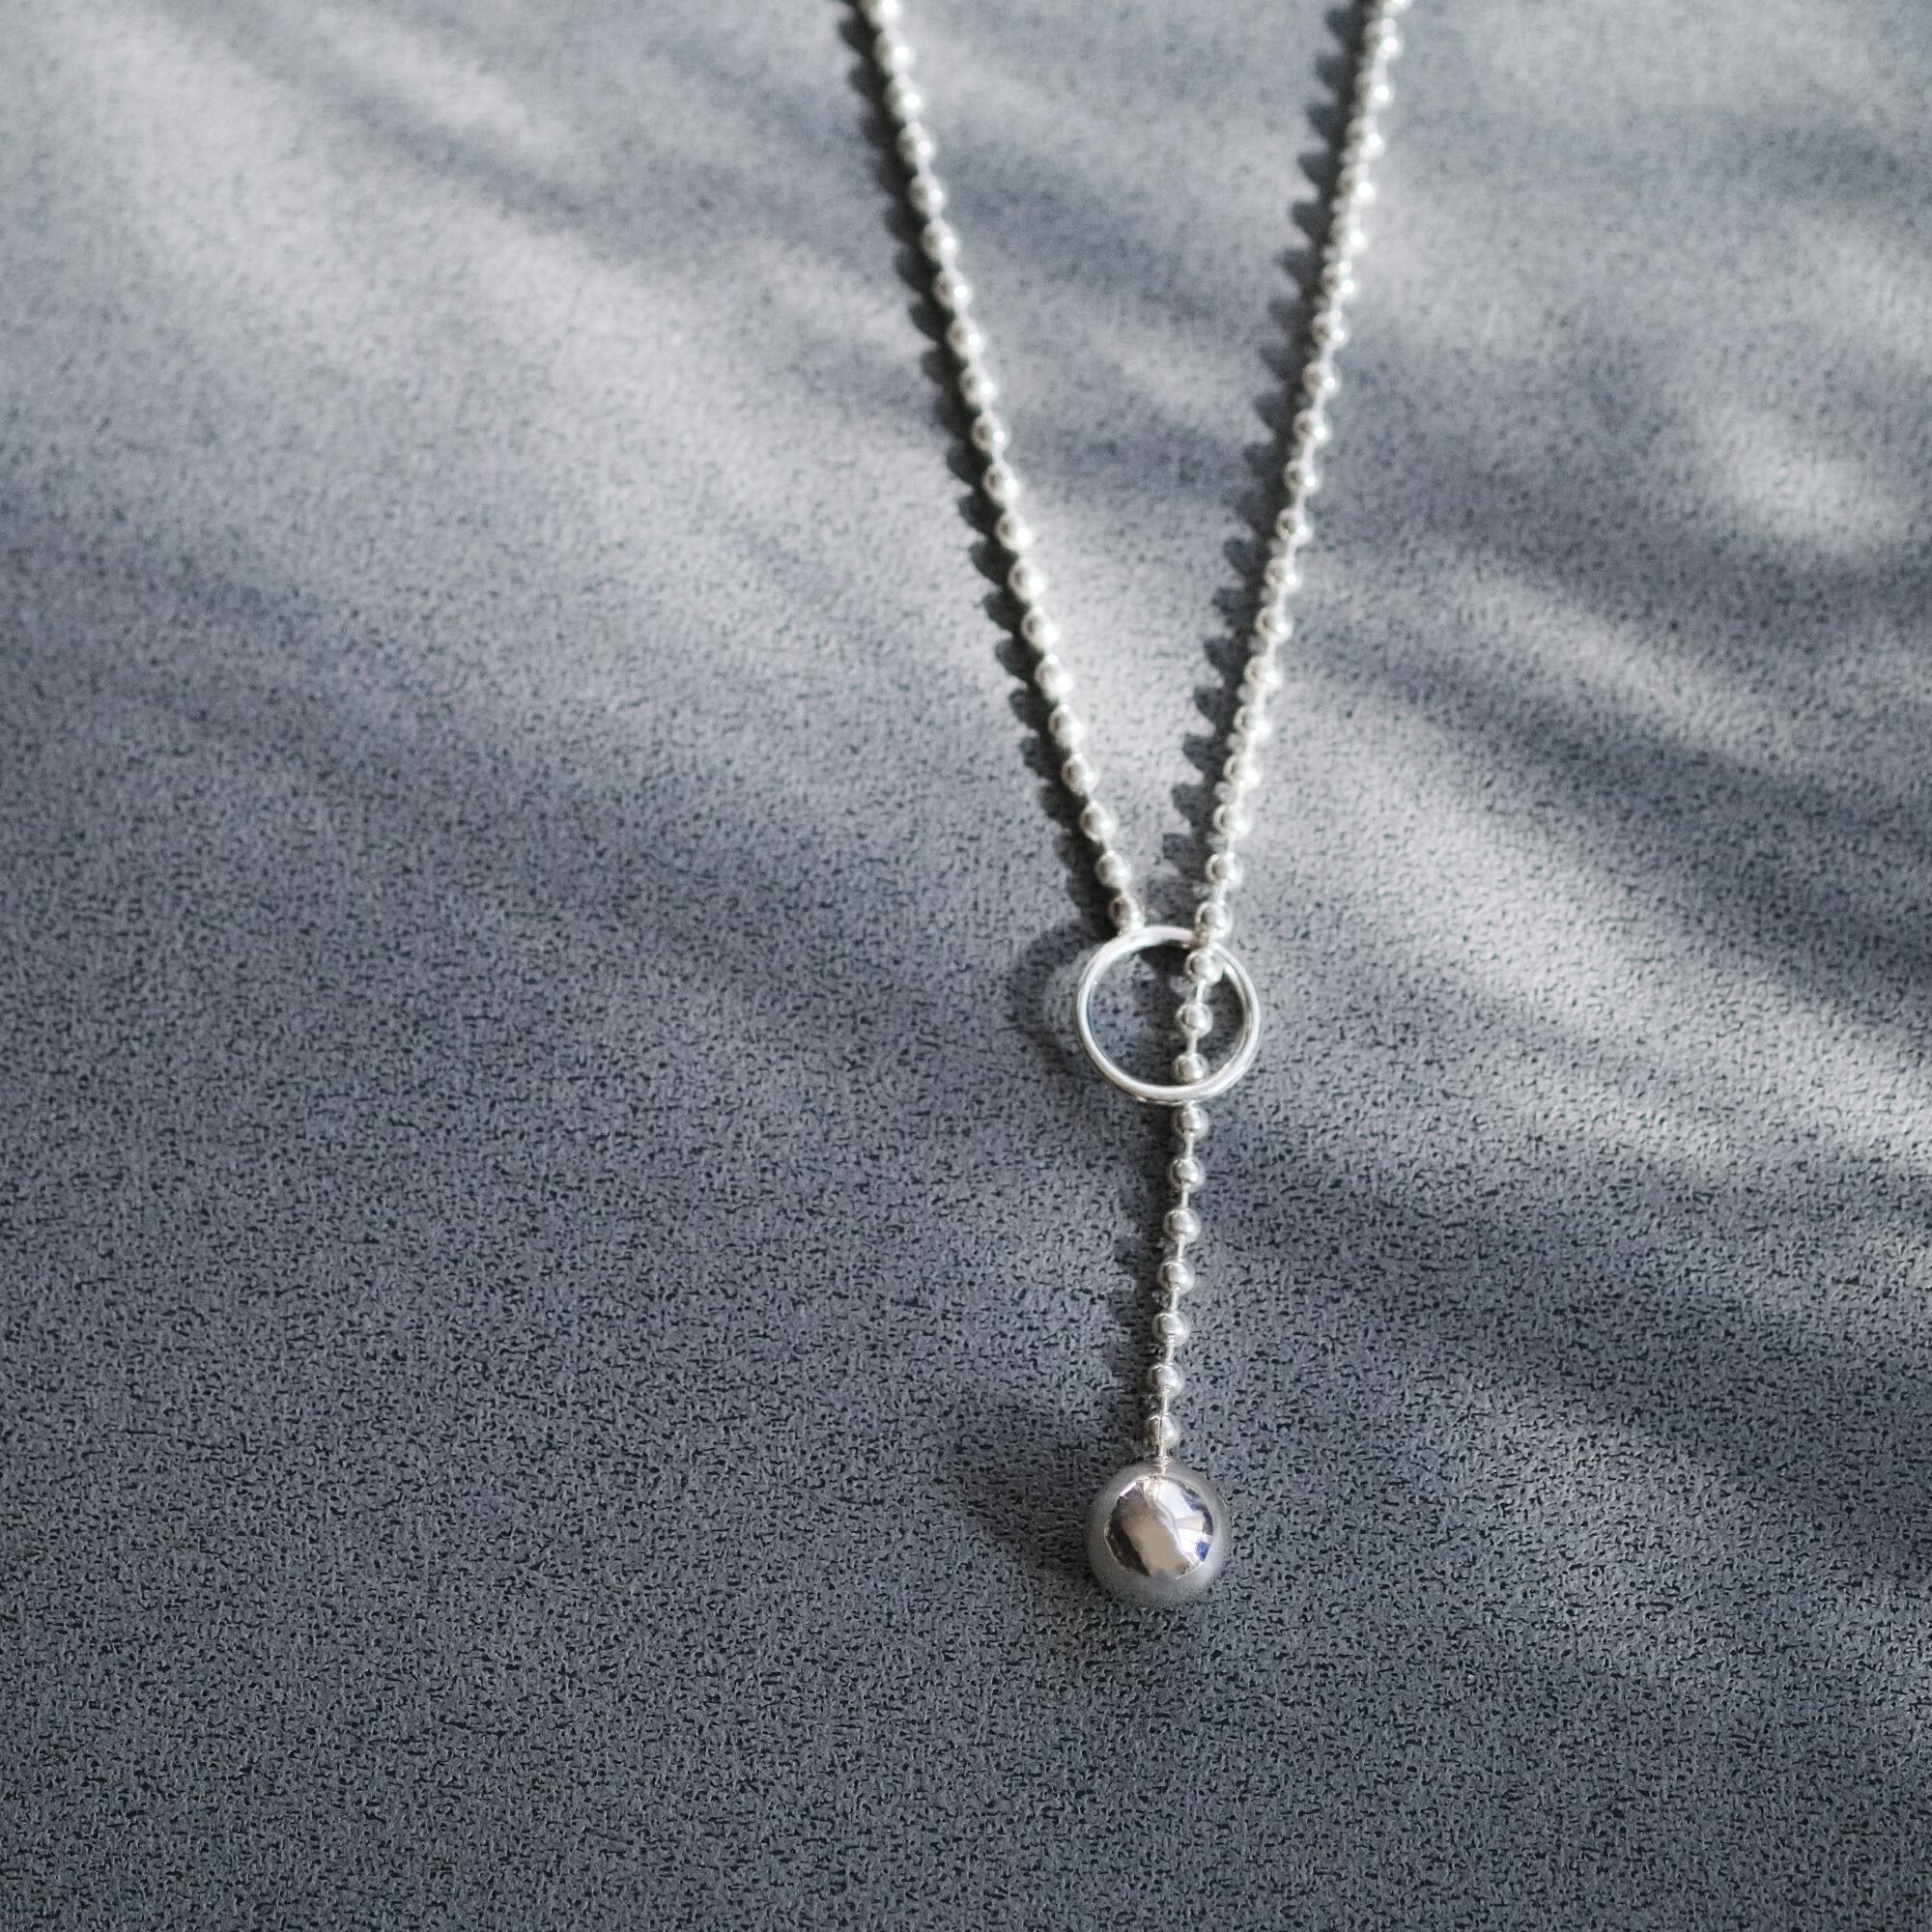 Necklace | クラウドジュエリー(Cloud-jewelry) レディース メンズ